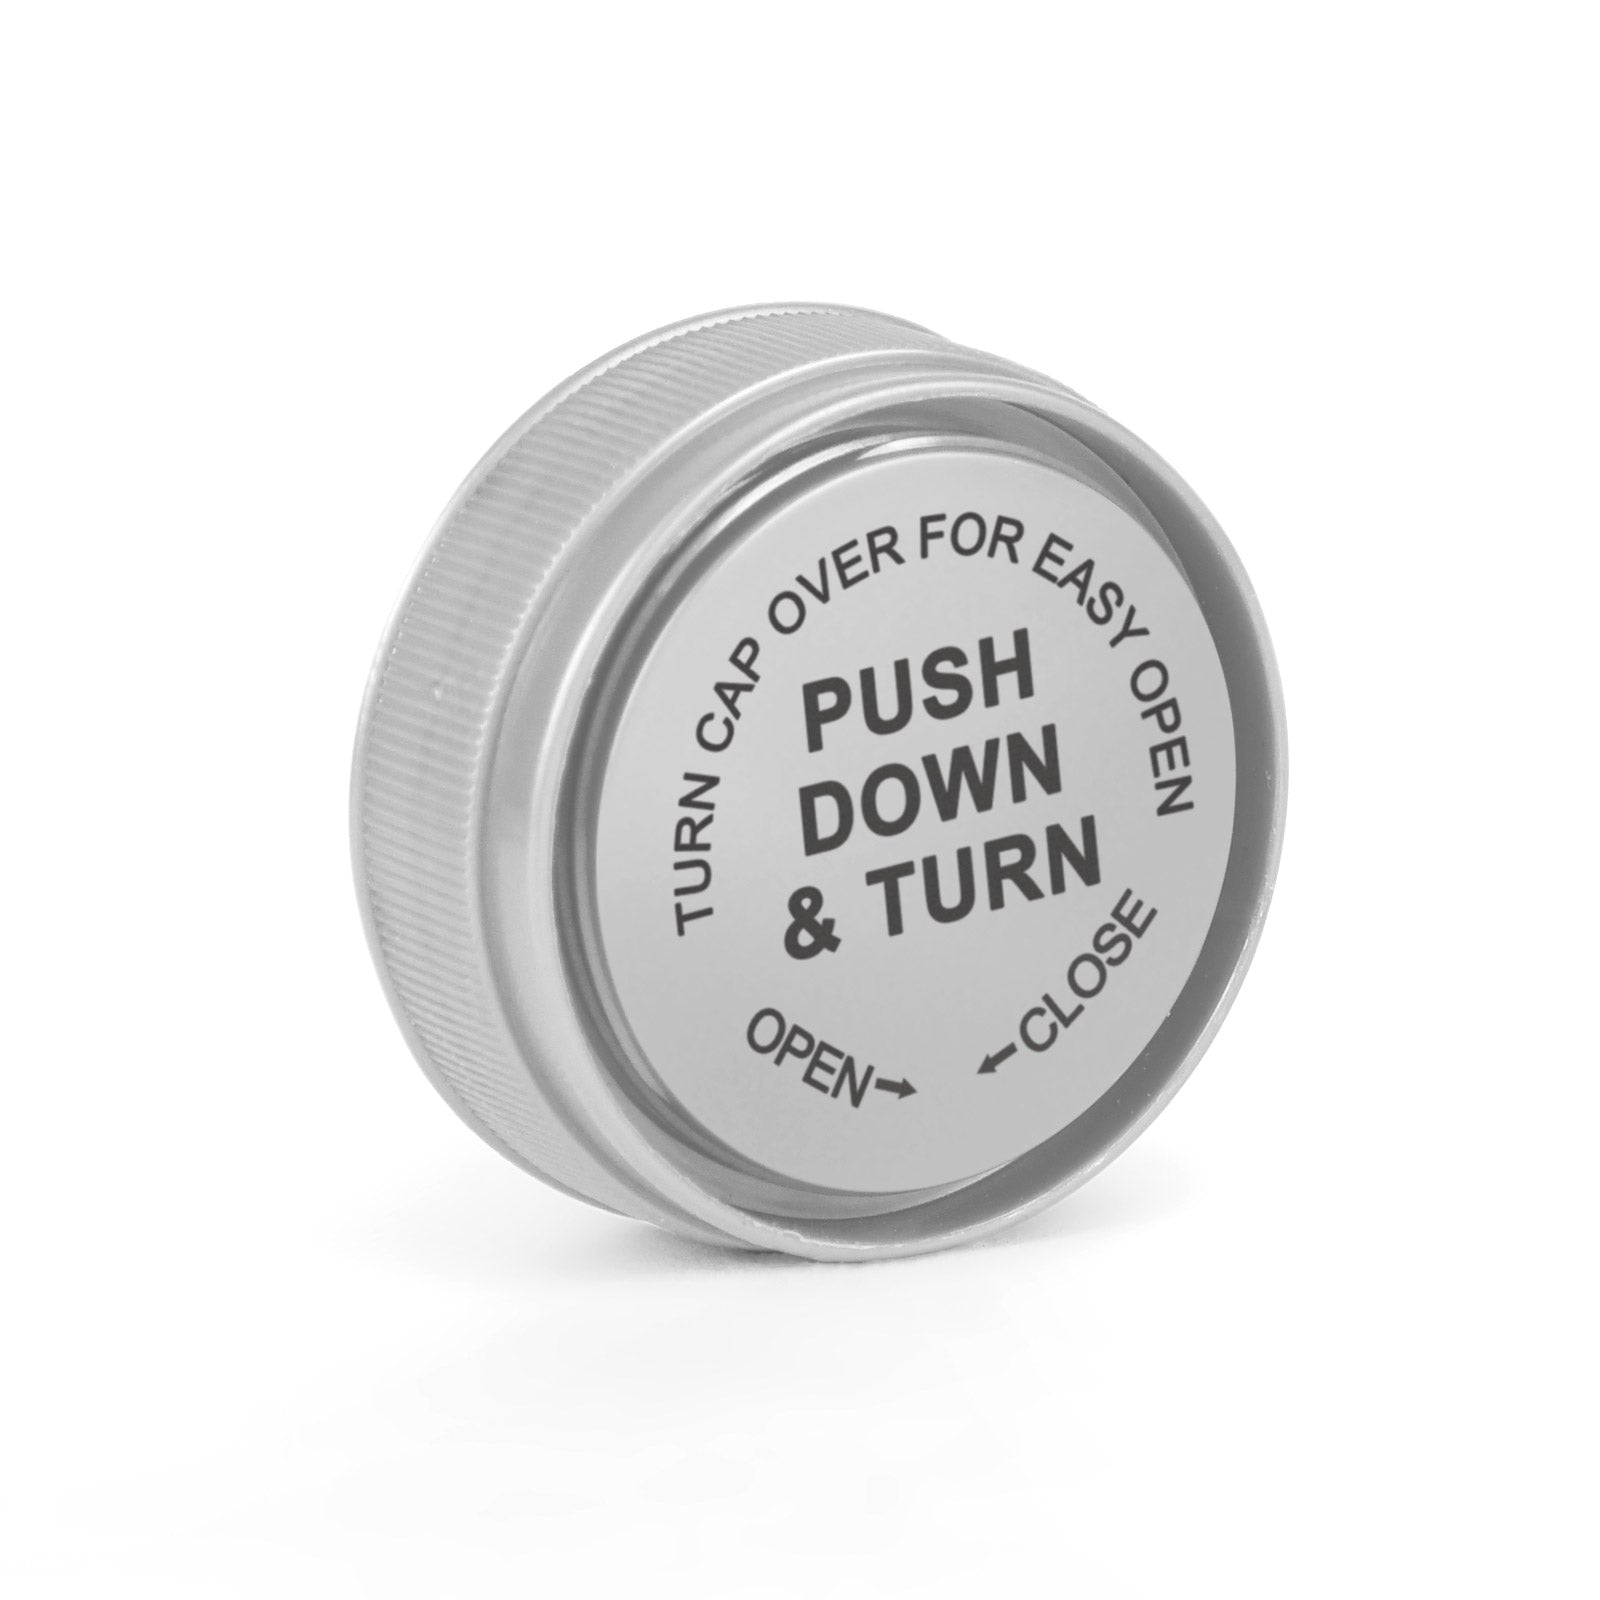 20 Dram Reversible Cap Opaque Silver - 1 Count